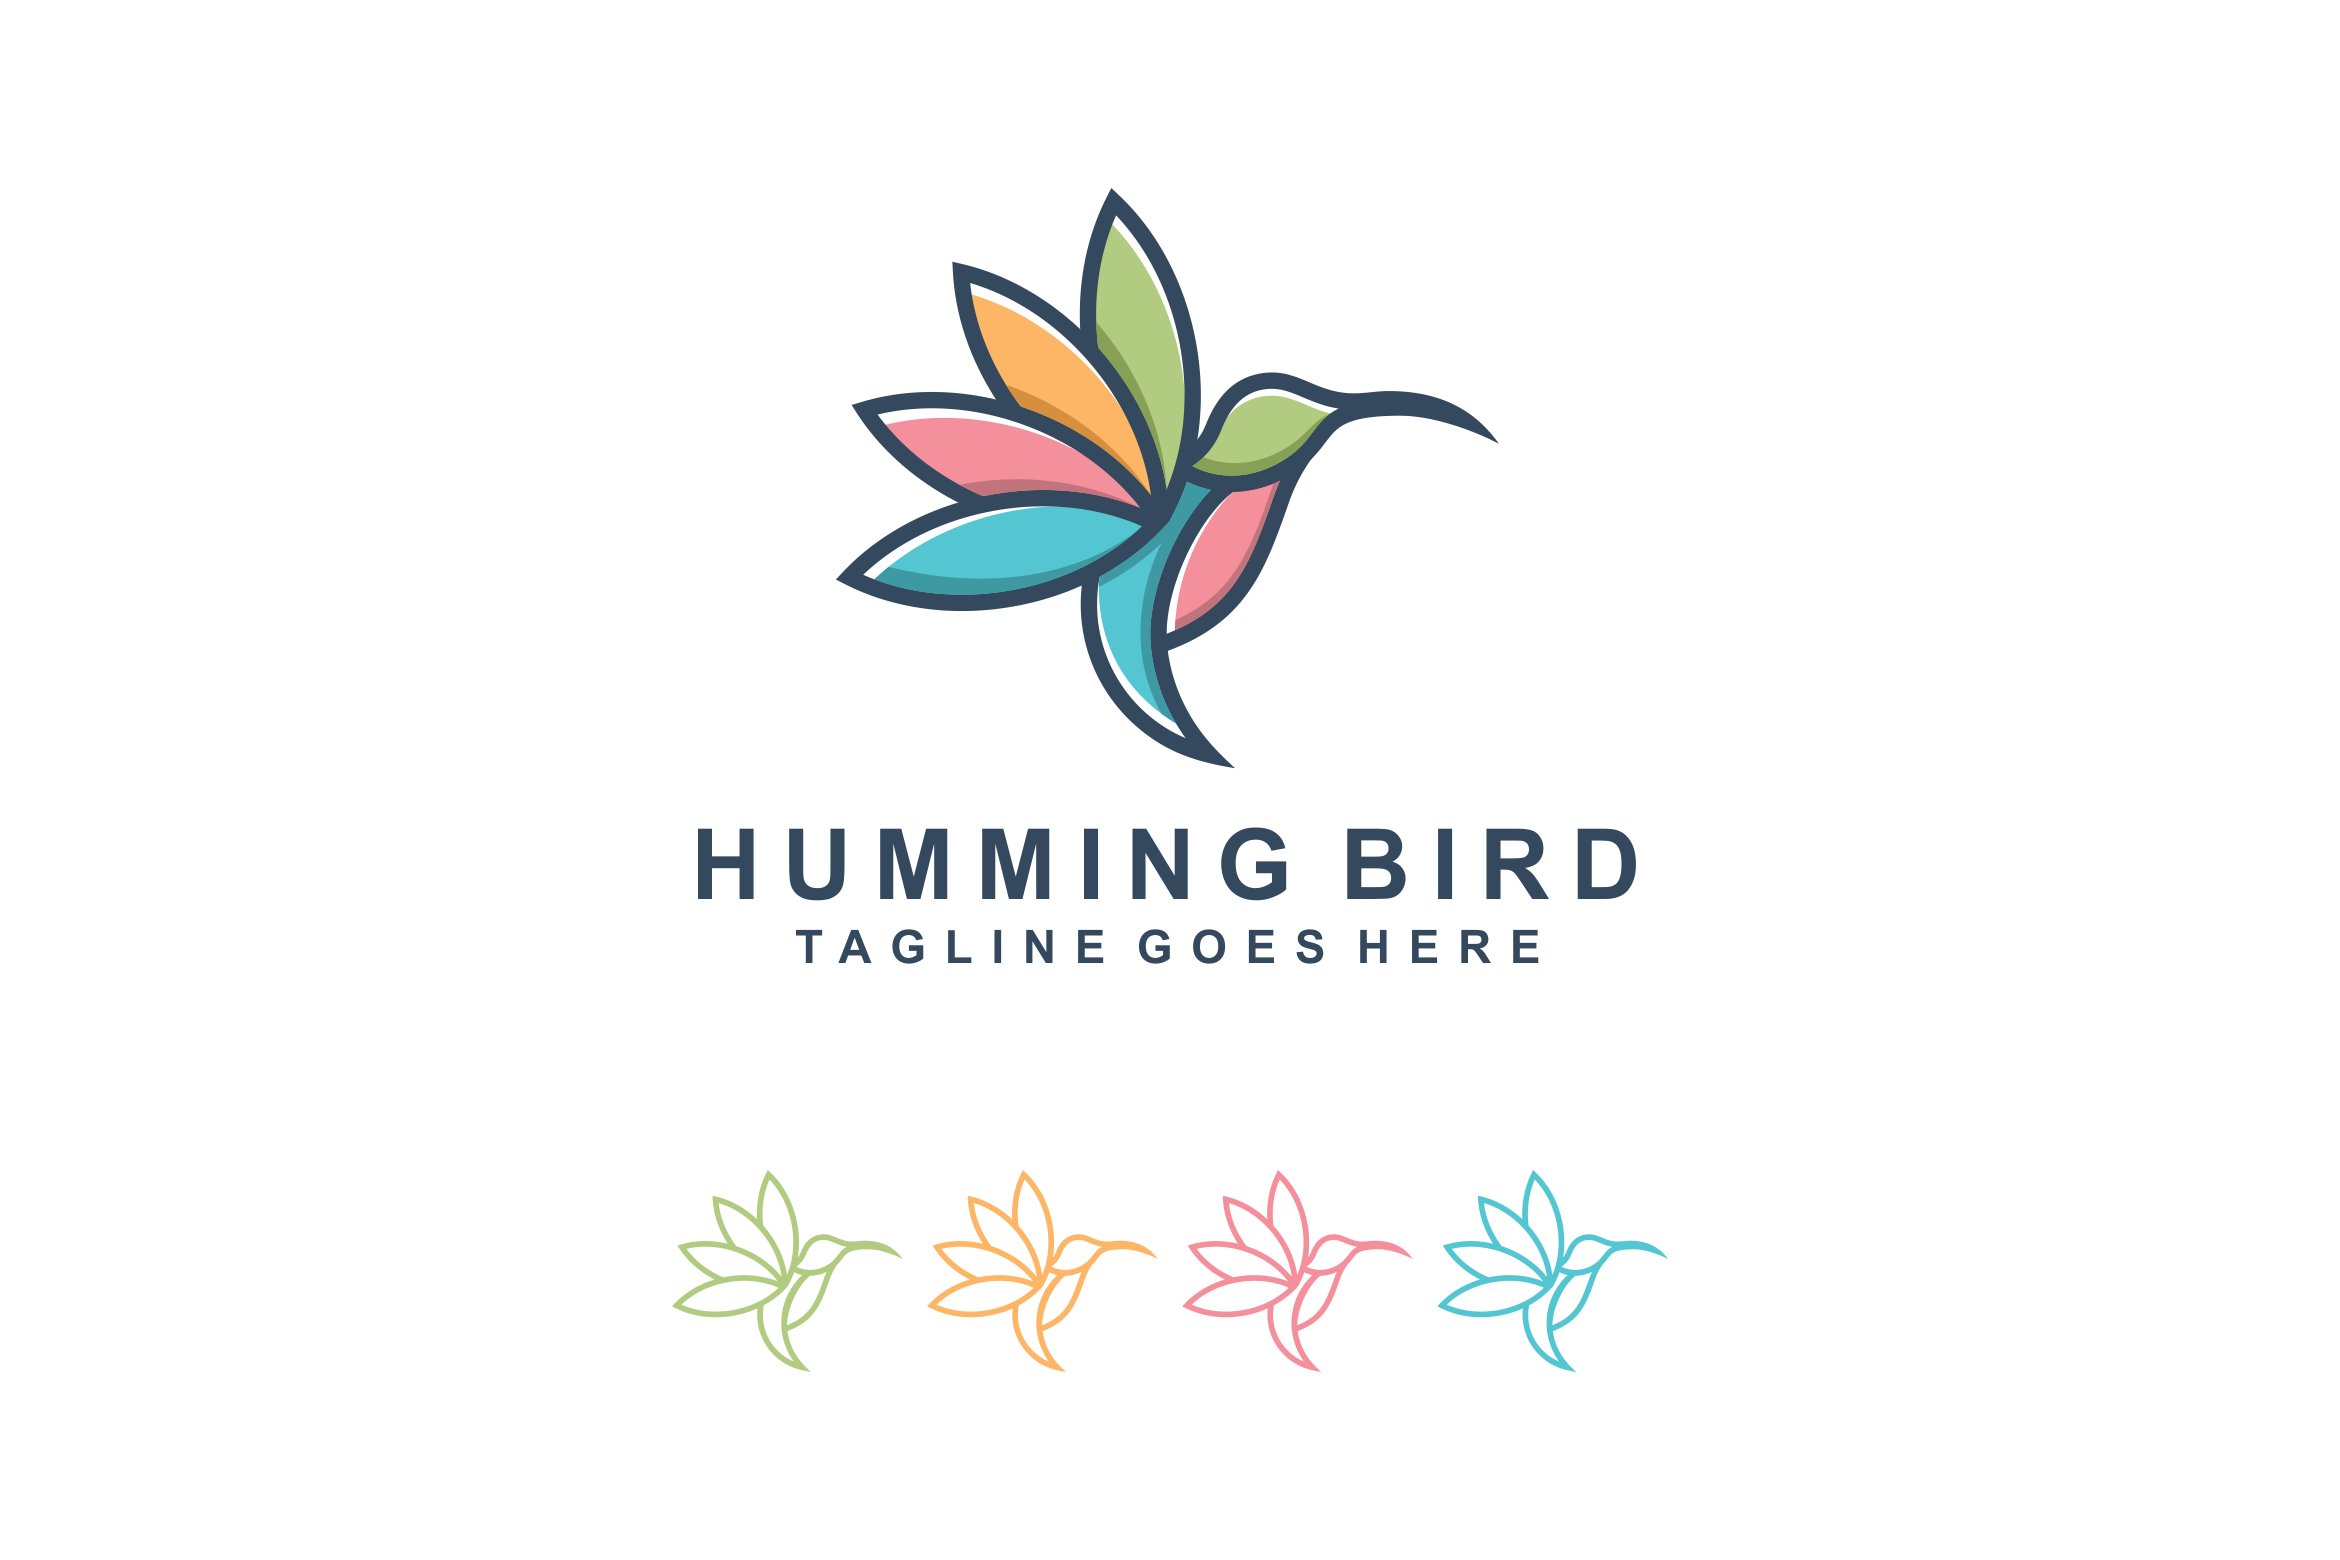 HUMMING BIRD LOGO TEMPLATE cover image.